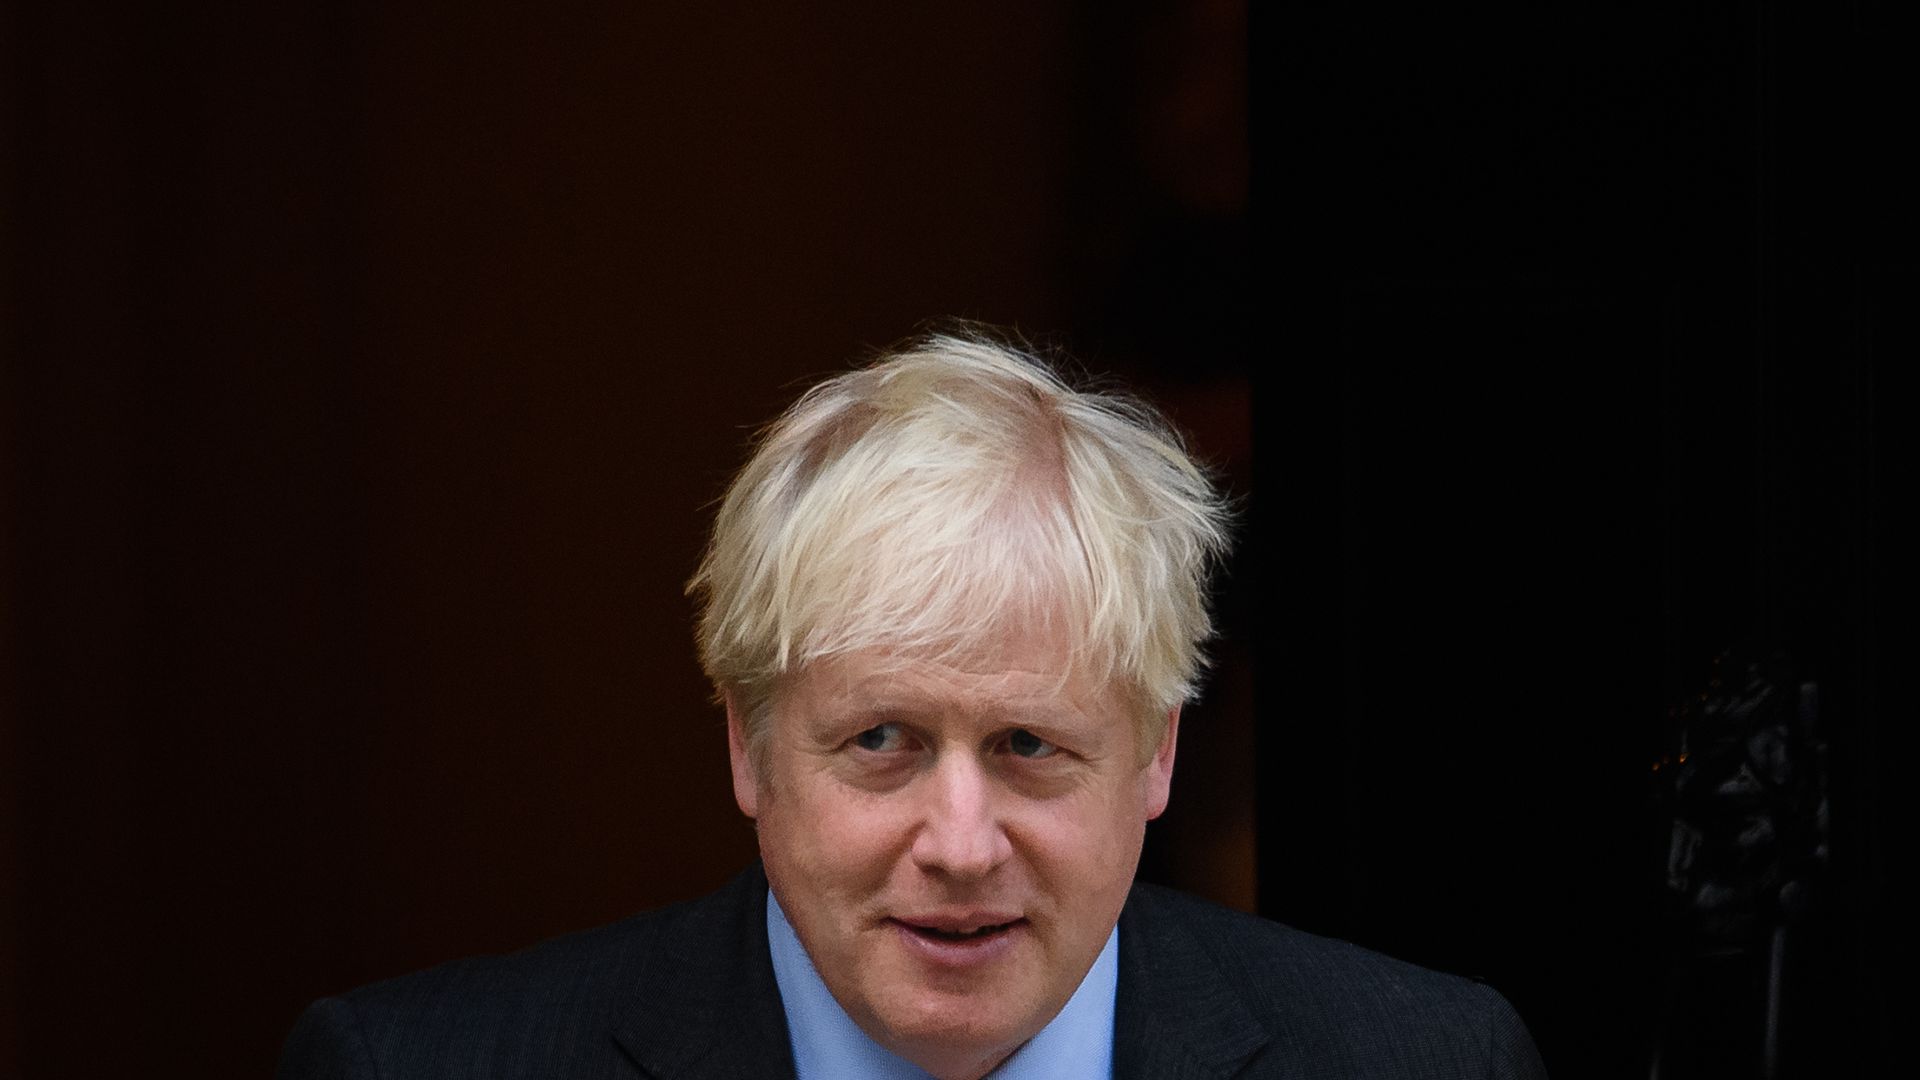 Boris Johnson walks towards the camera while looking to the left